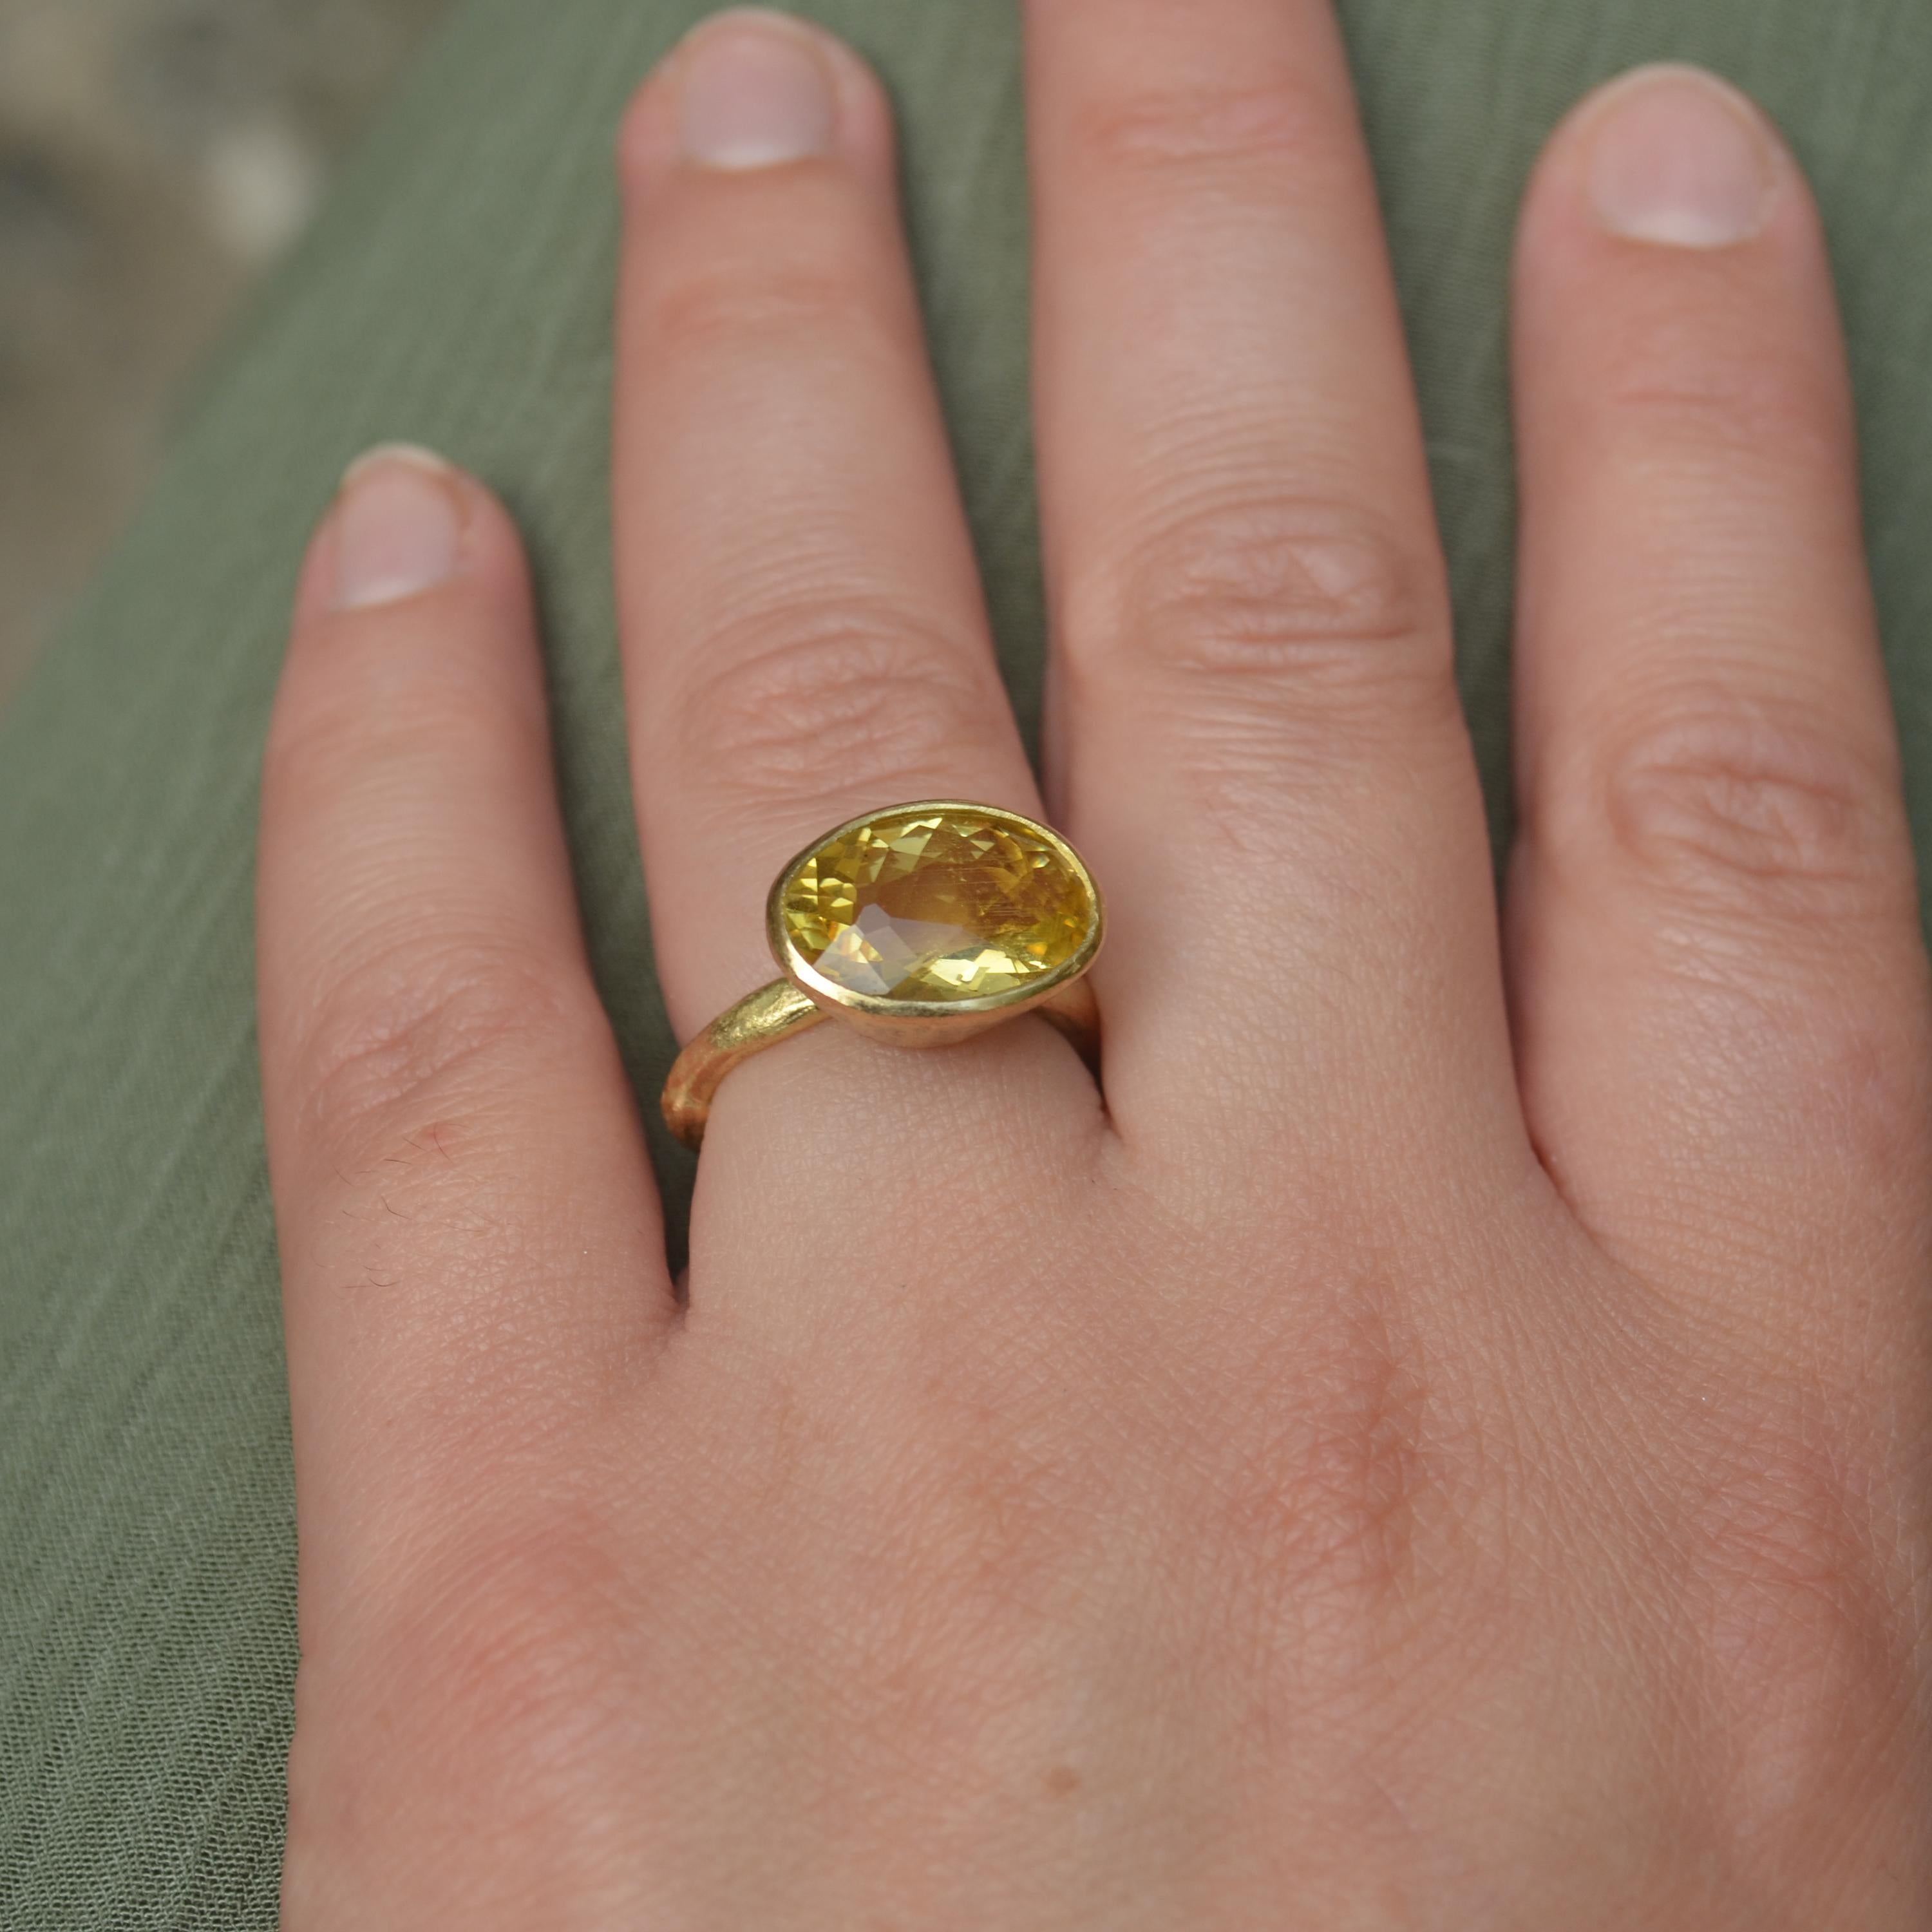 Oval Cut Oval Six Carat Yellow Zircon 18 Karat Gold Ring Handmade by Disa Allsopp